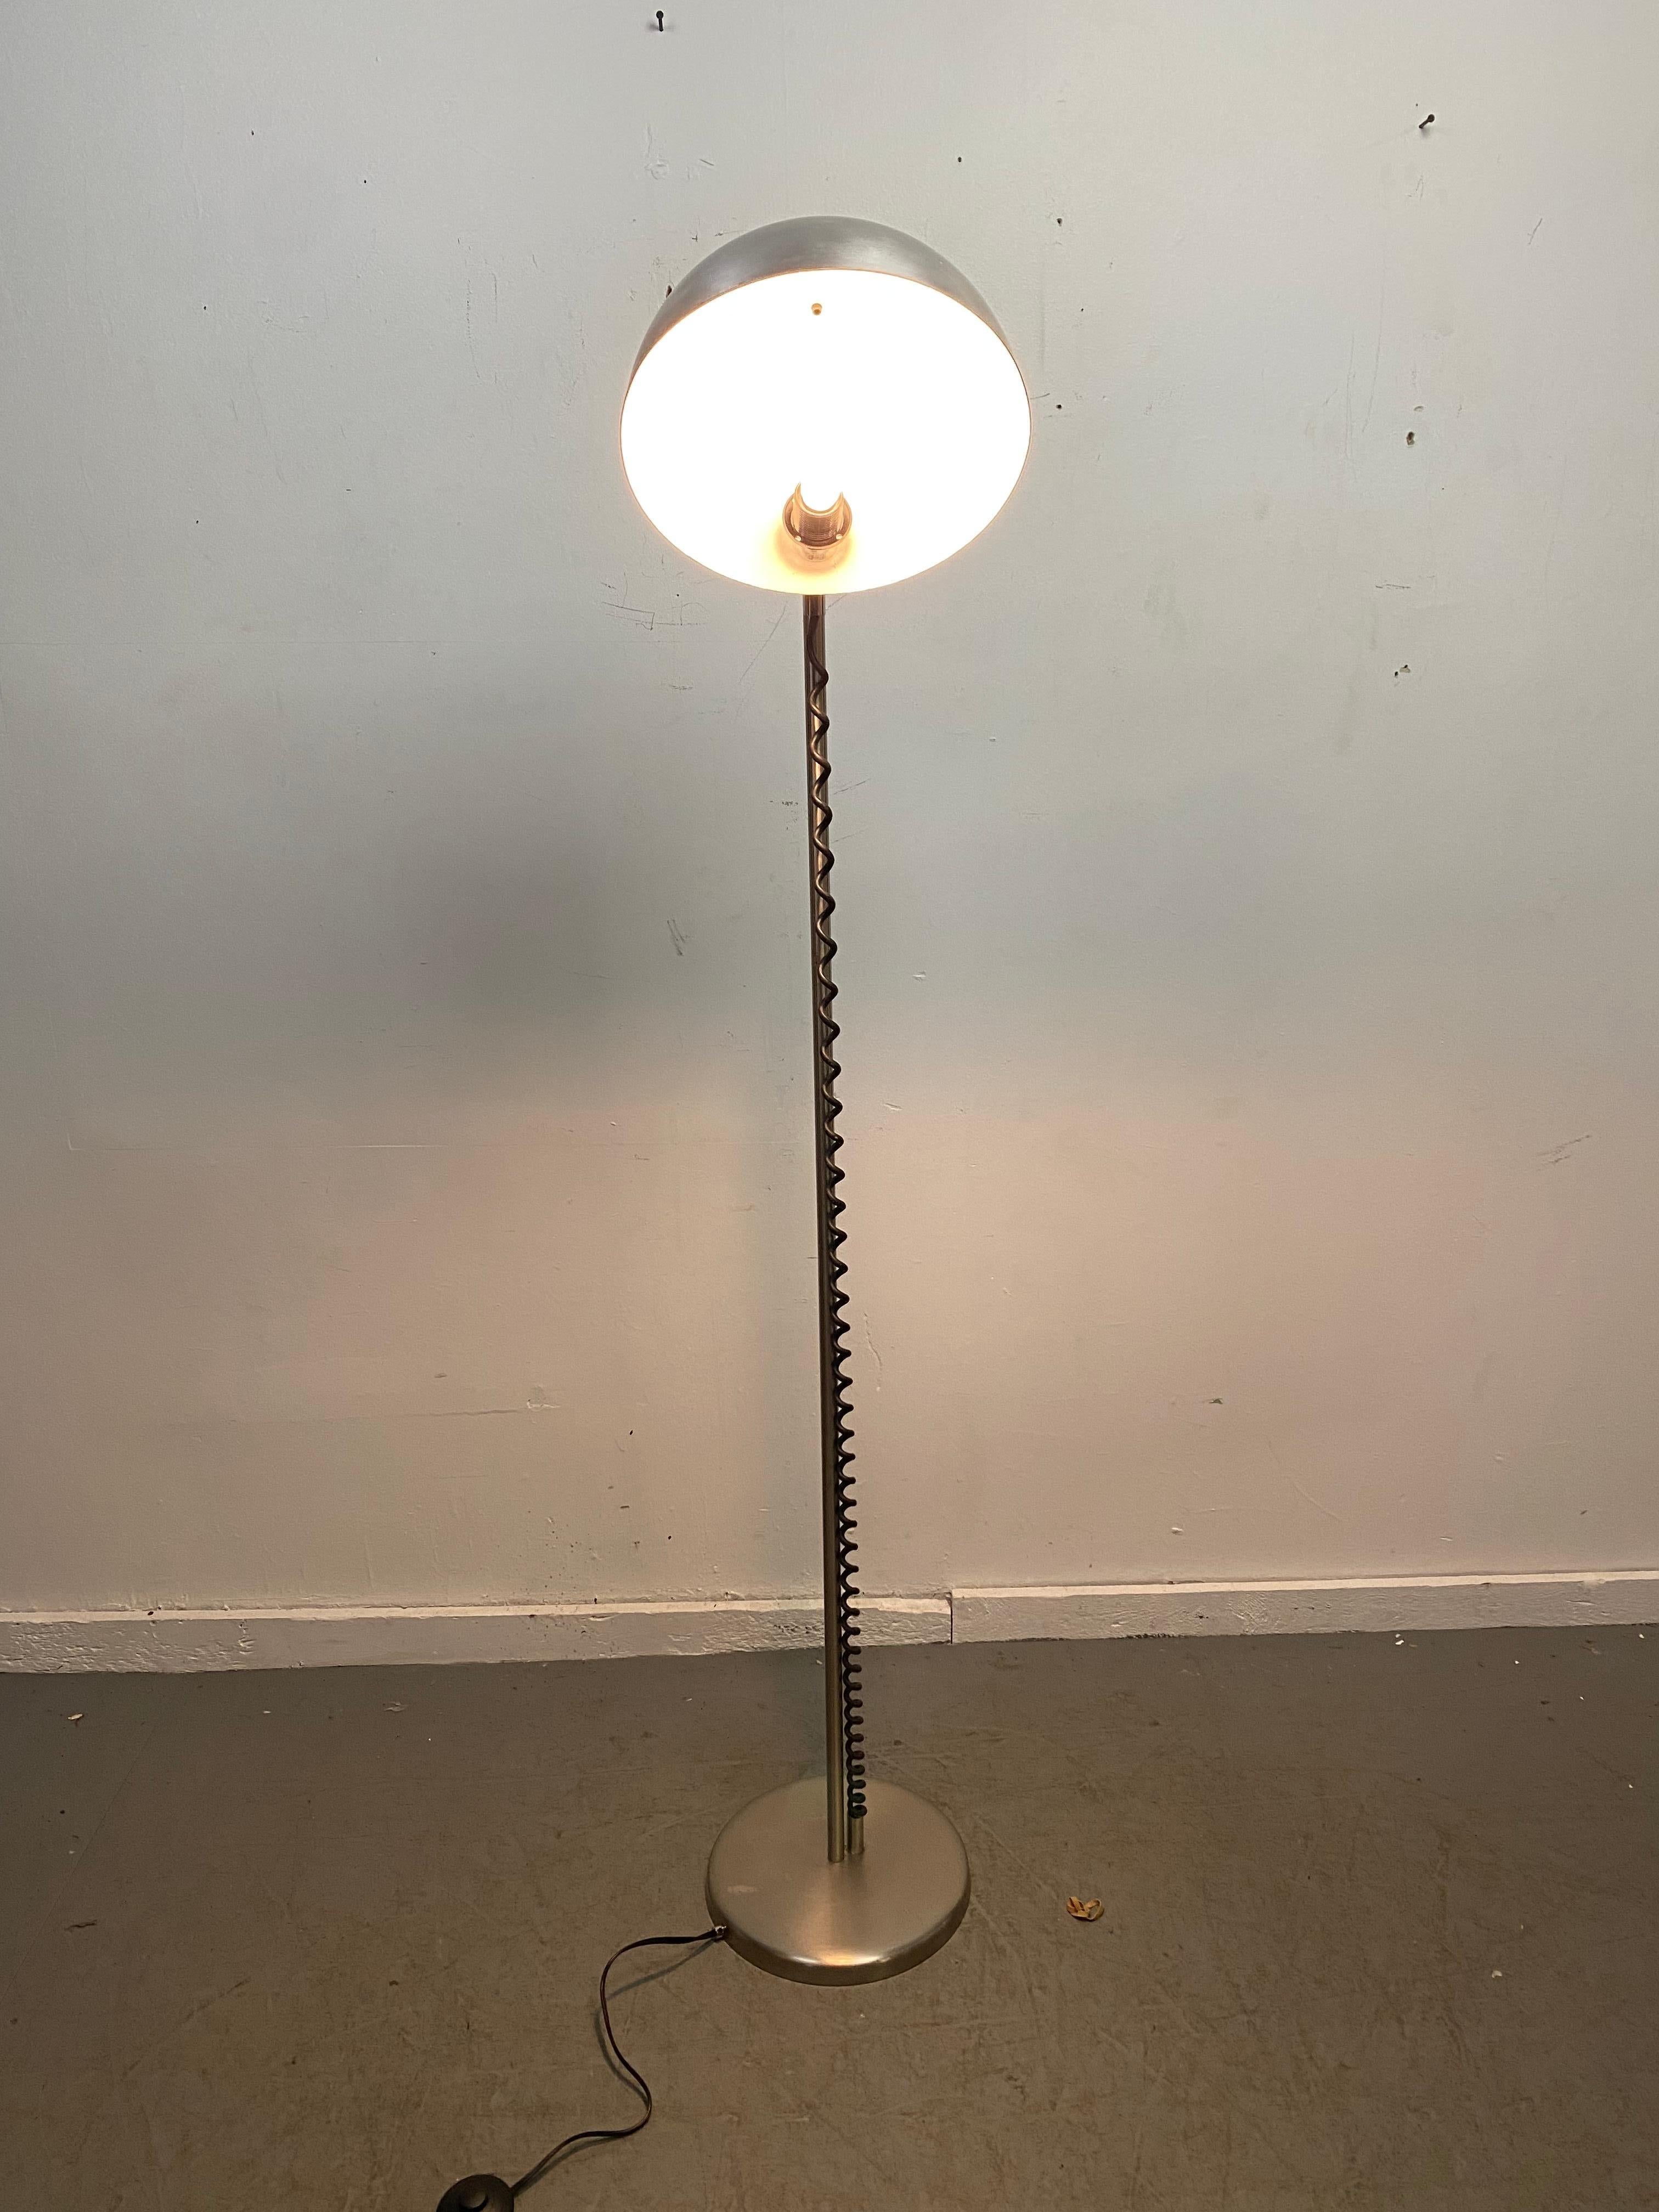 Late 20th Century Unusual 1970s Bauhaus Inspired Adjustable Floor Lamp, Spun Aluminum Shade For Sale